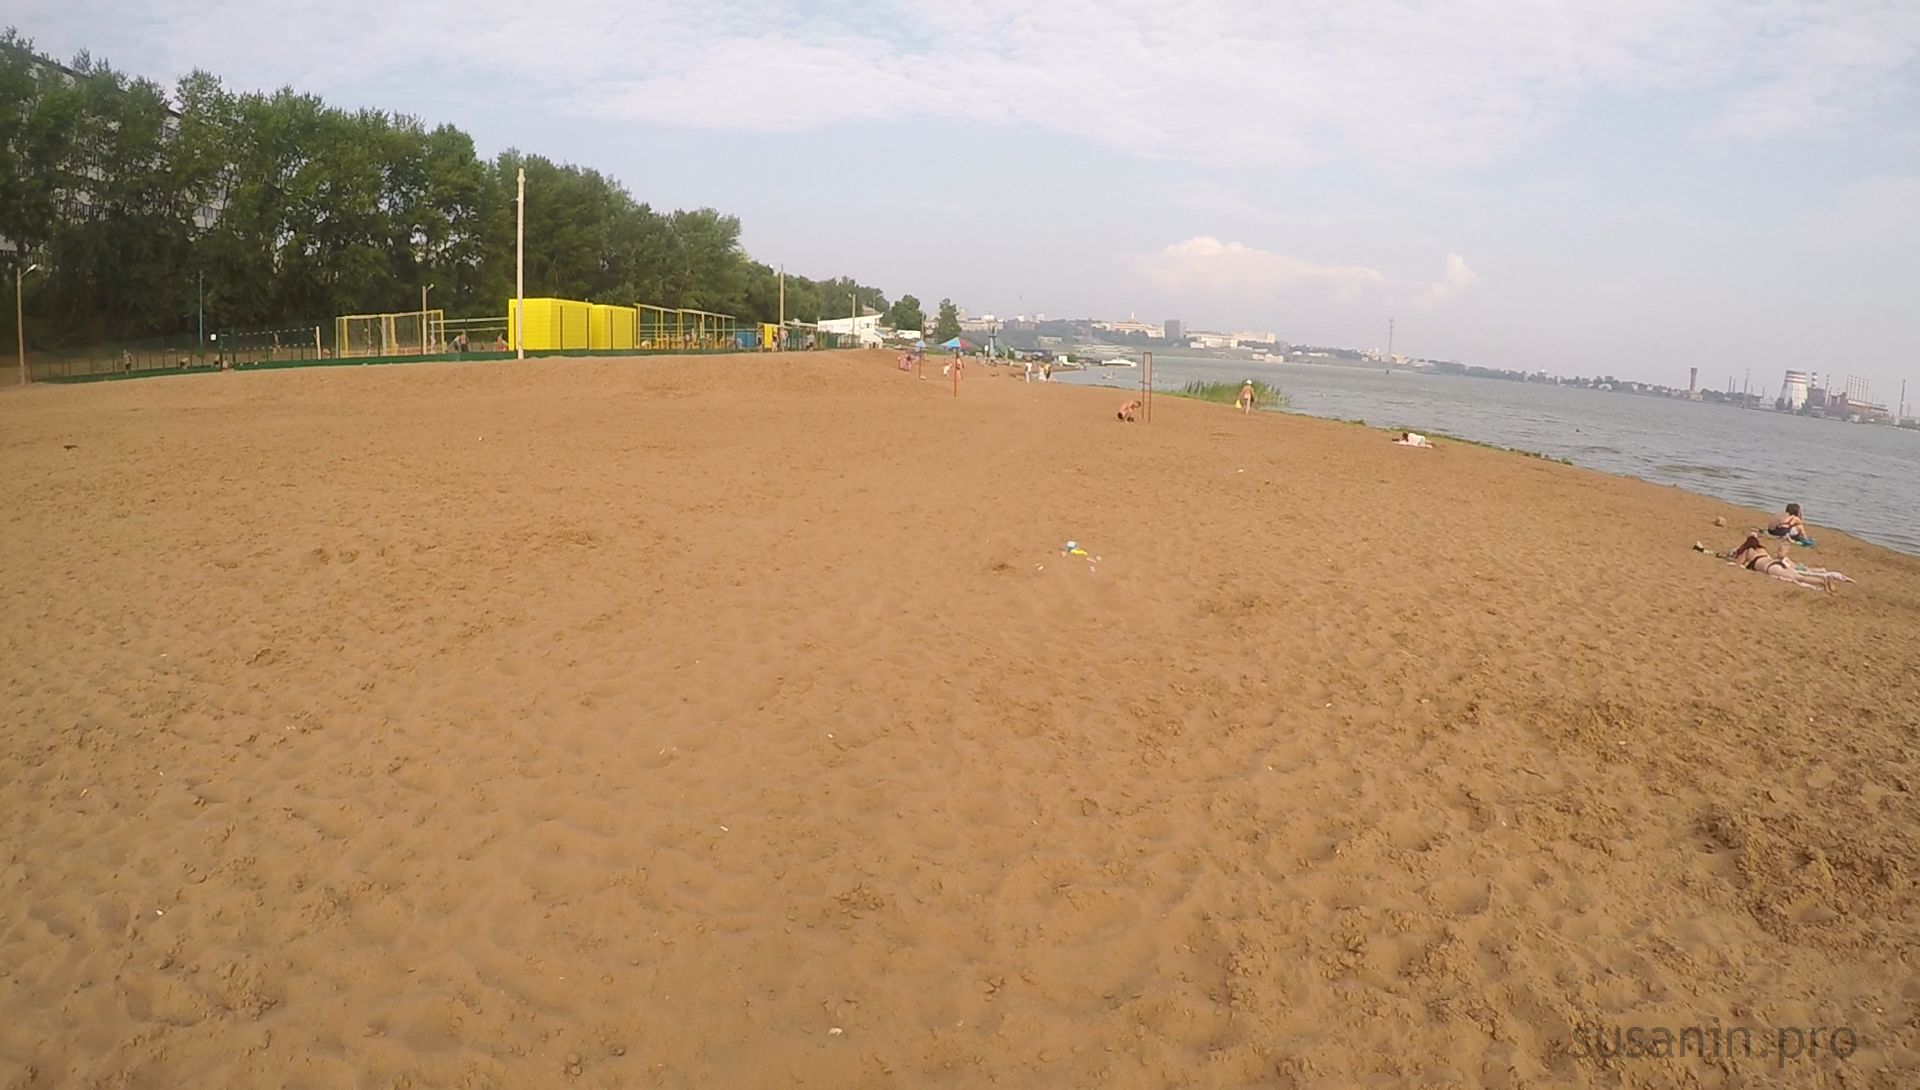 Пляж в ижевске фото